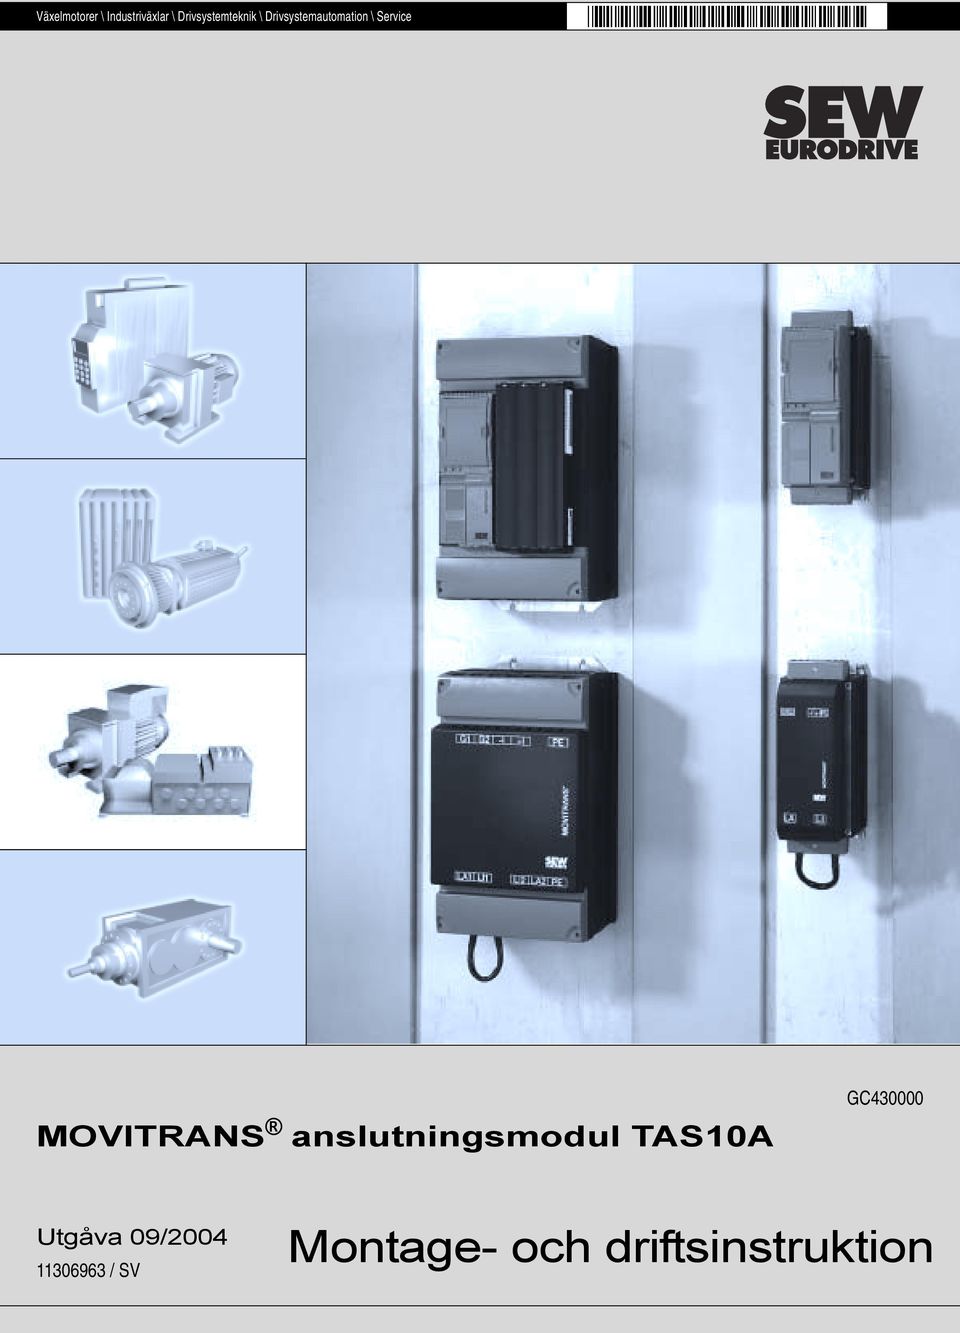 MOVITRANS anslutningsmodul TAS10A GC430000